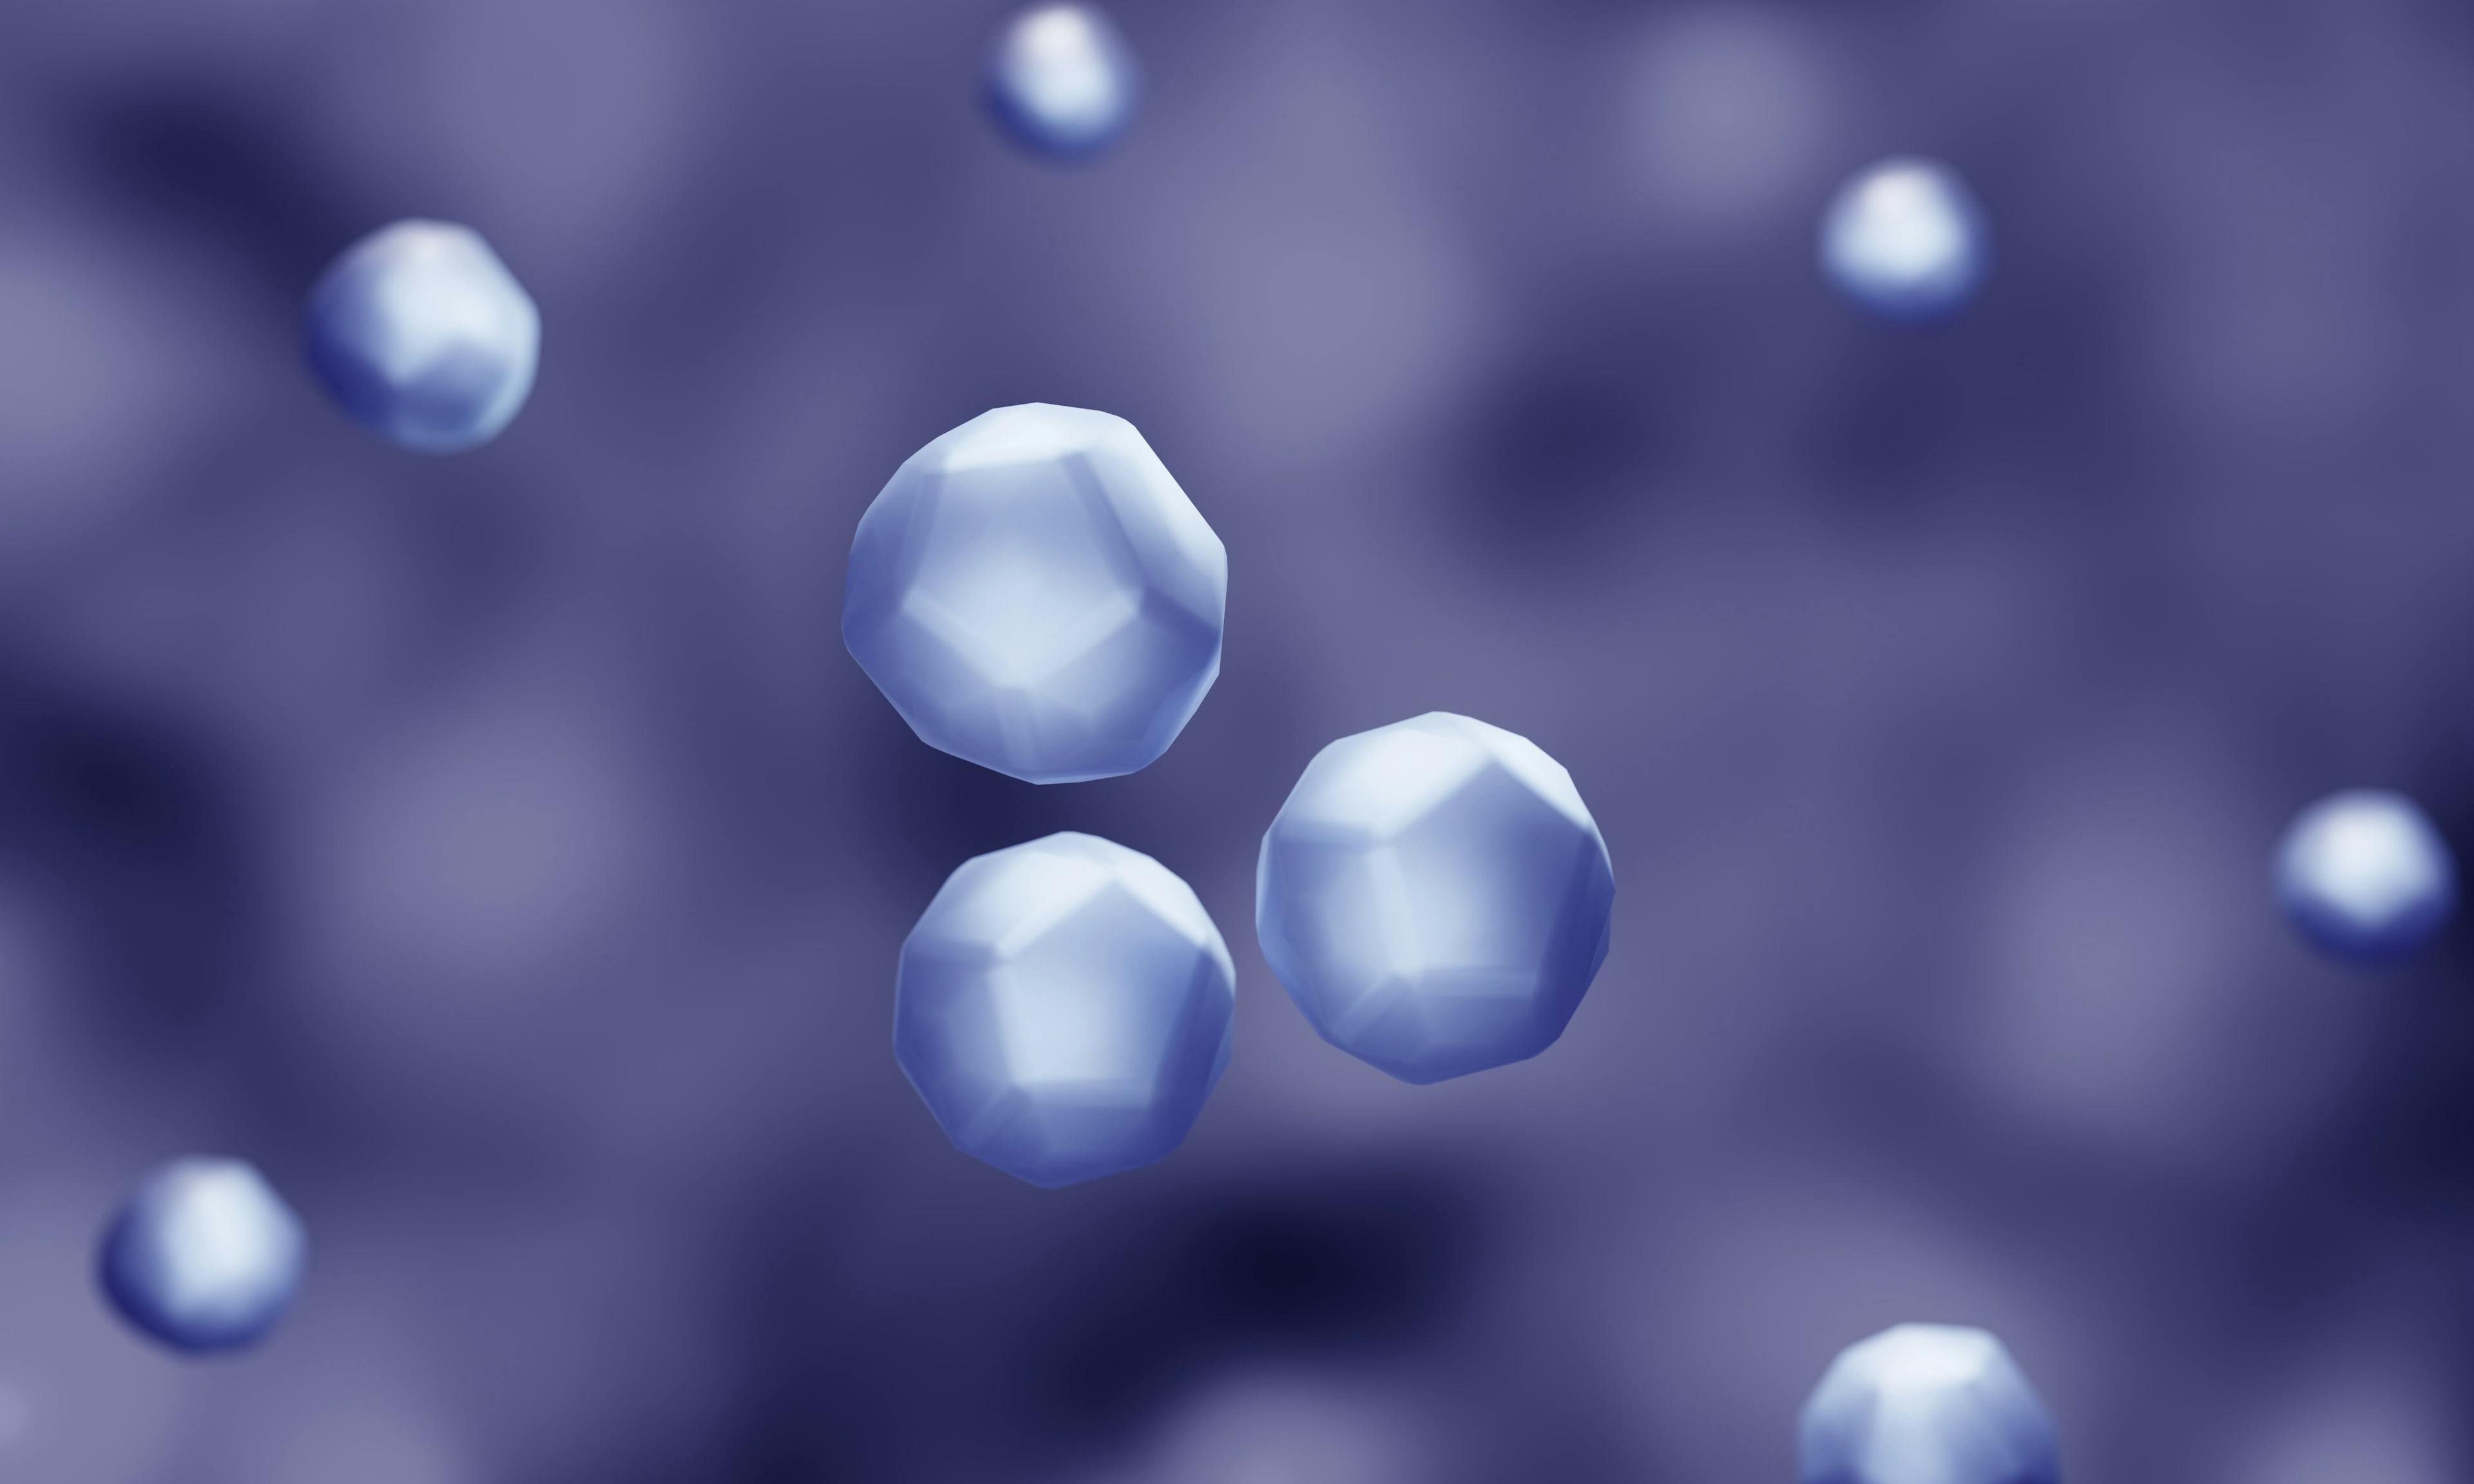 3d illustration of nanoparticles | Image Credit: © Artur - stock.adobe.com